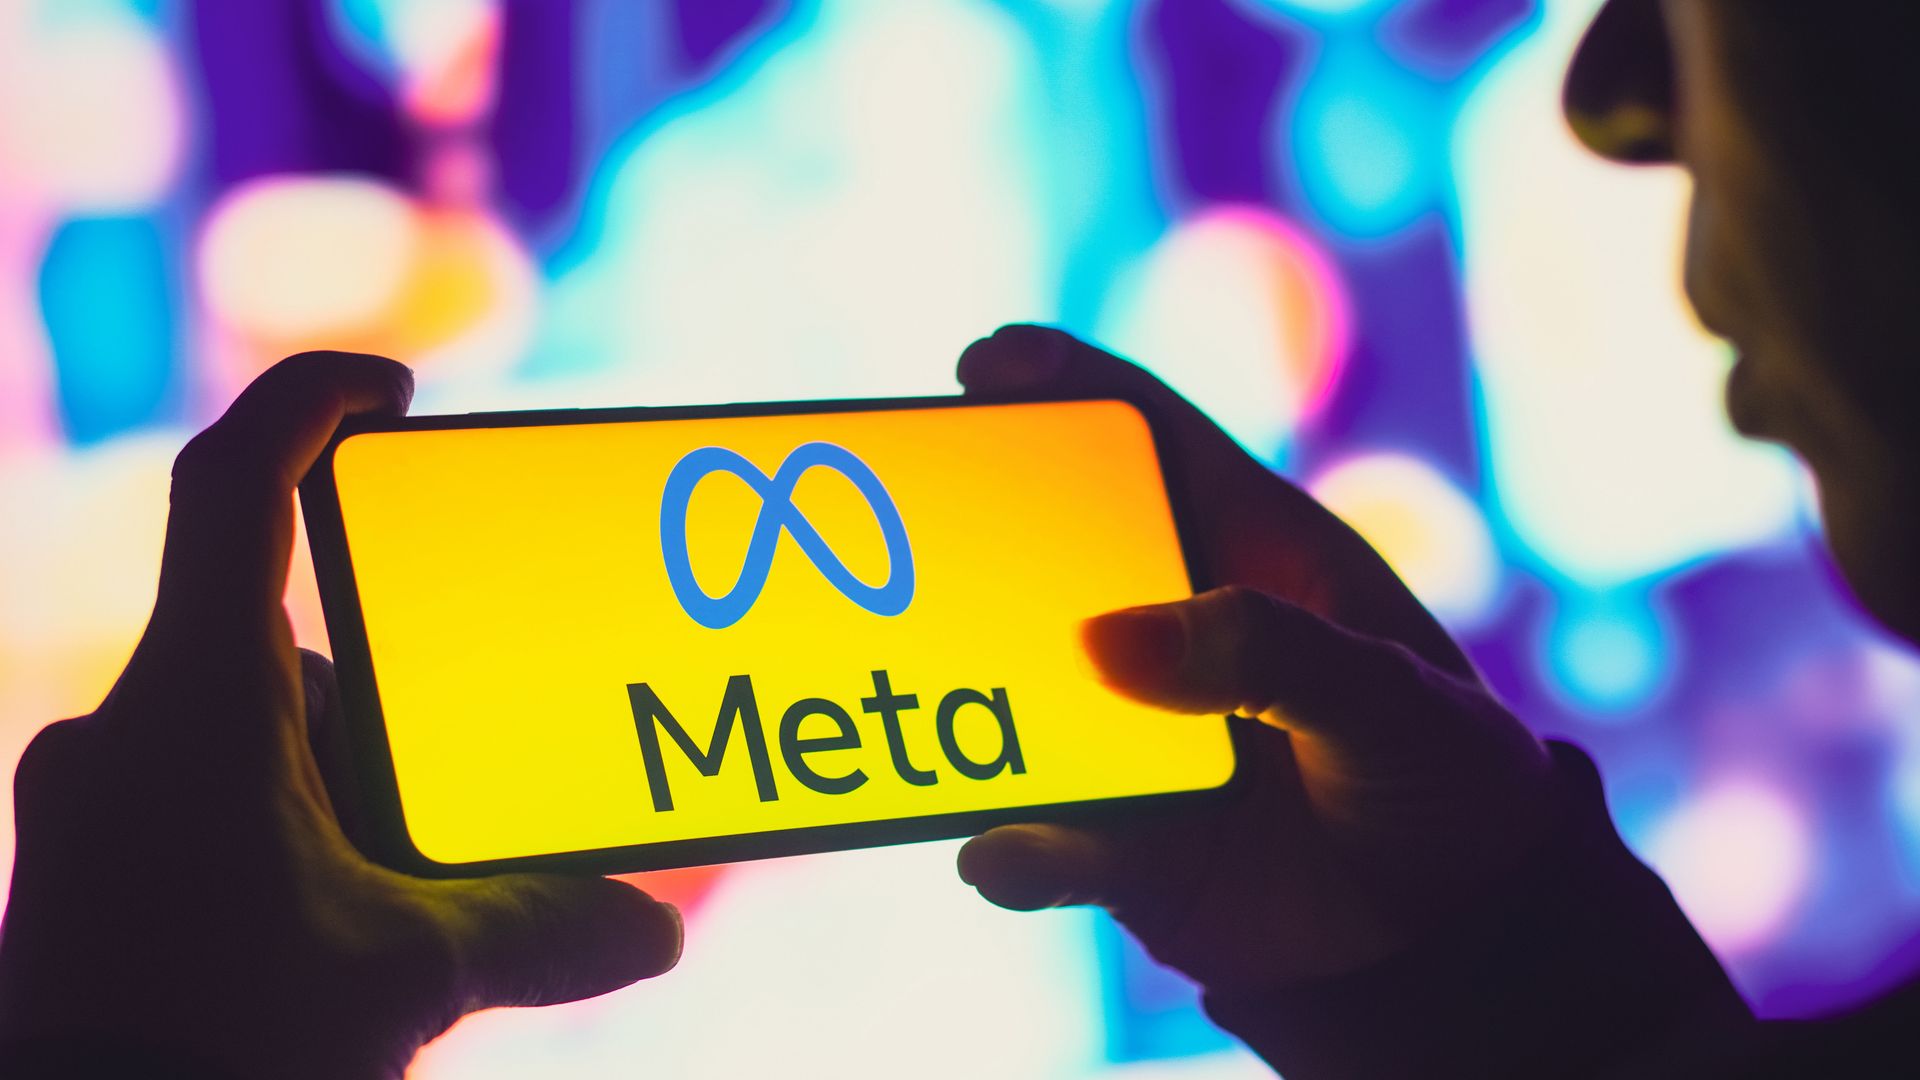 Meta stock soars following revenue beat, positive outlook